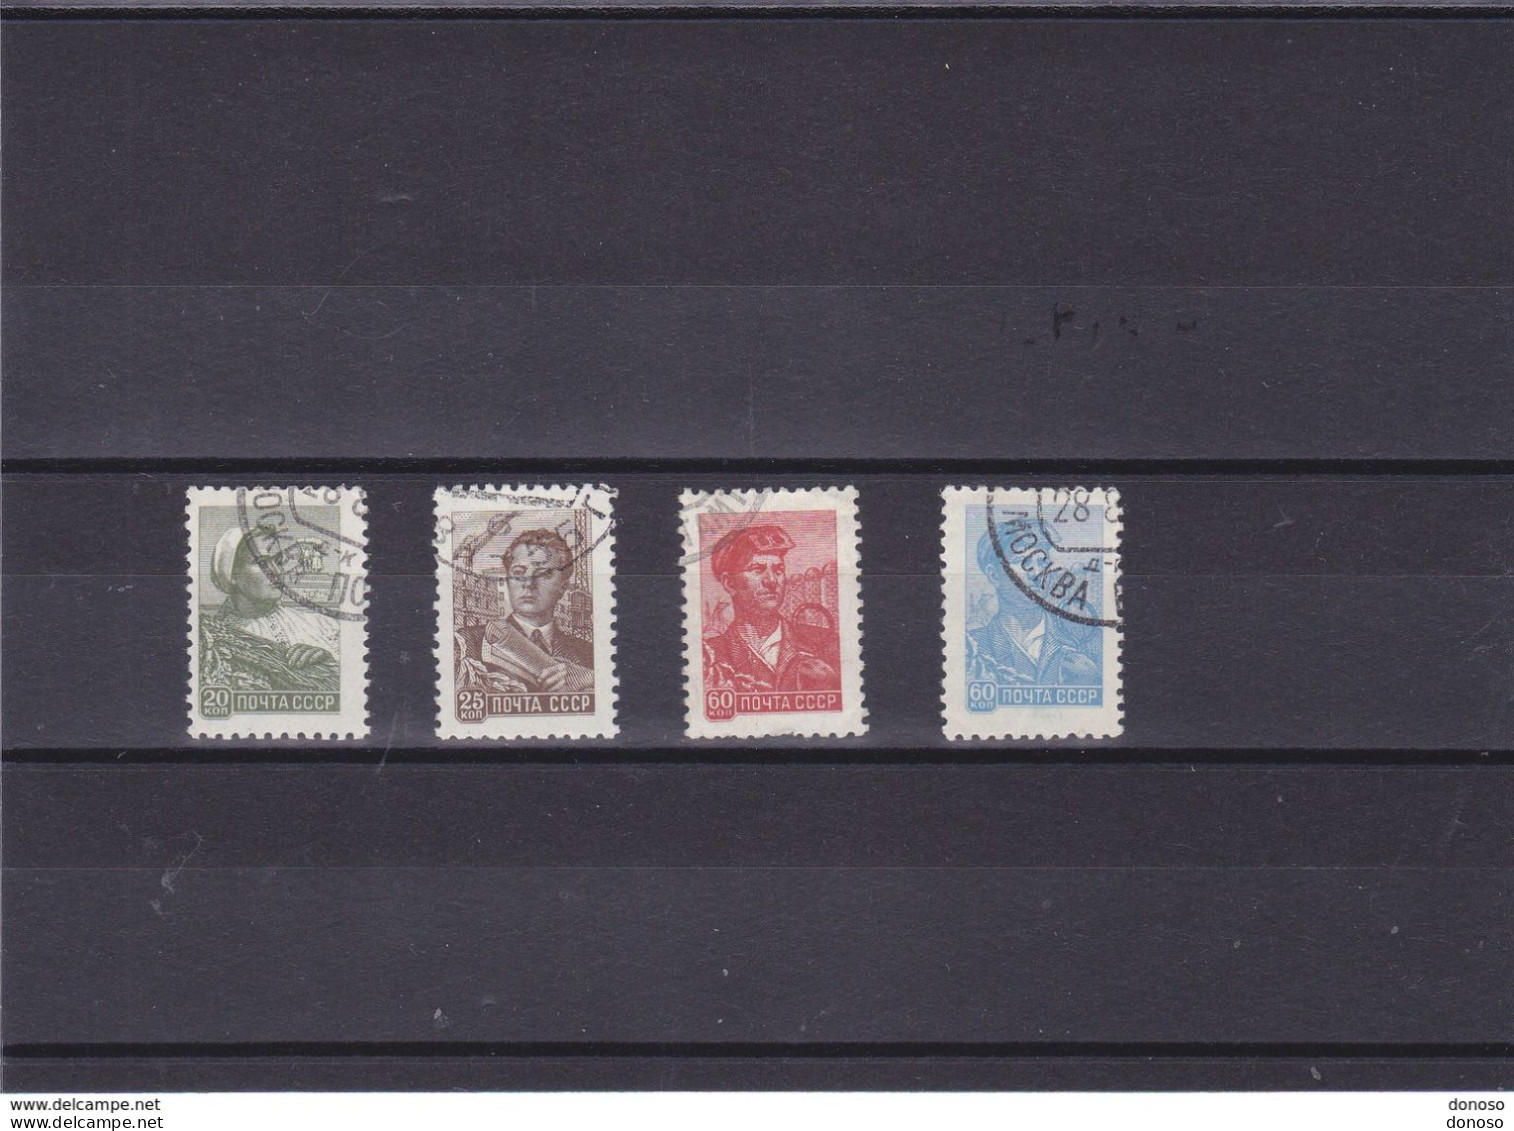 URSS 1958 Série Courante Yvert 2090A-2090D Oblitéré - Used Stamps